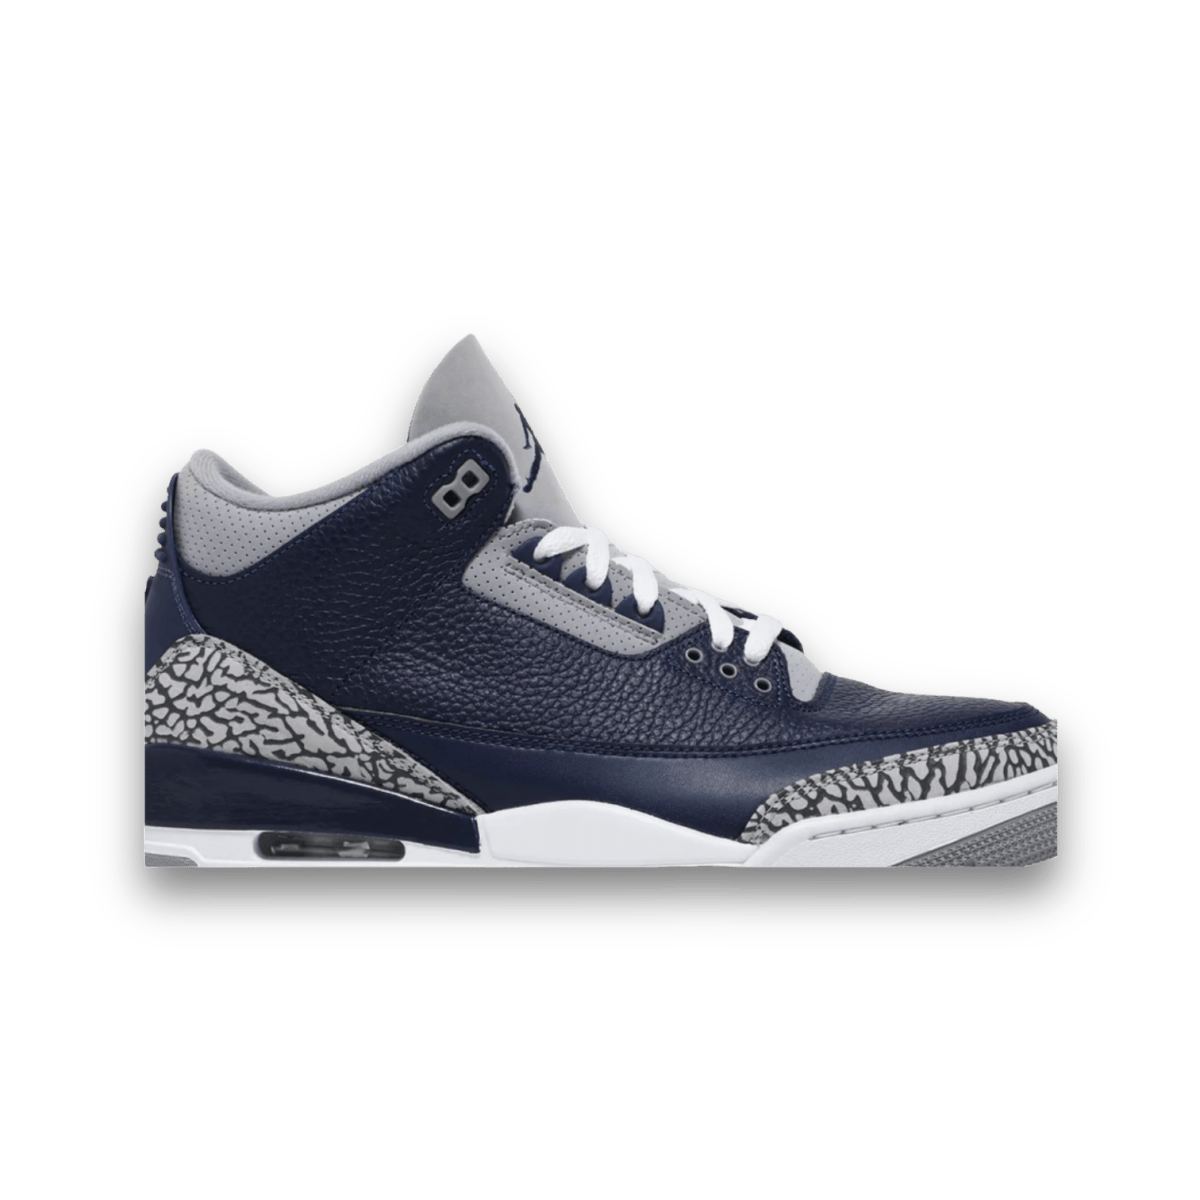 Laces for Lions Air Jordan 3 Retro Navy & Silver - Mid Sneaker - Jawns on Fire Sneakers & Streetwear